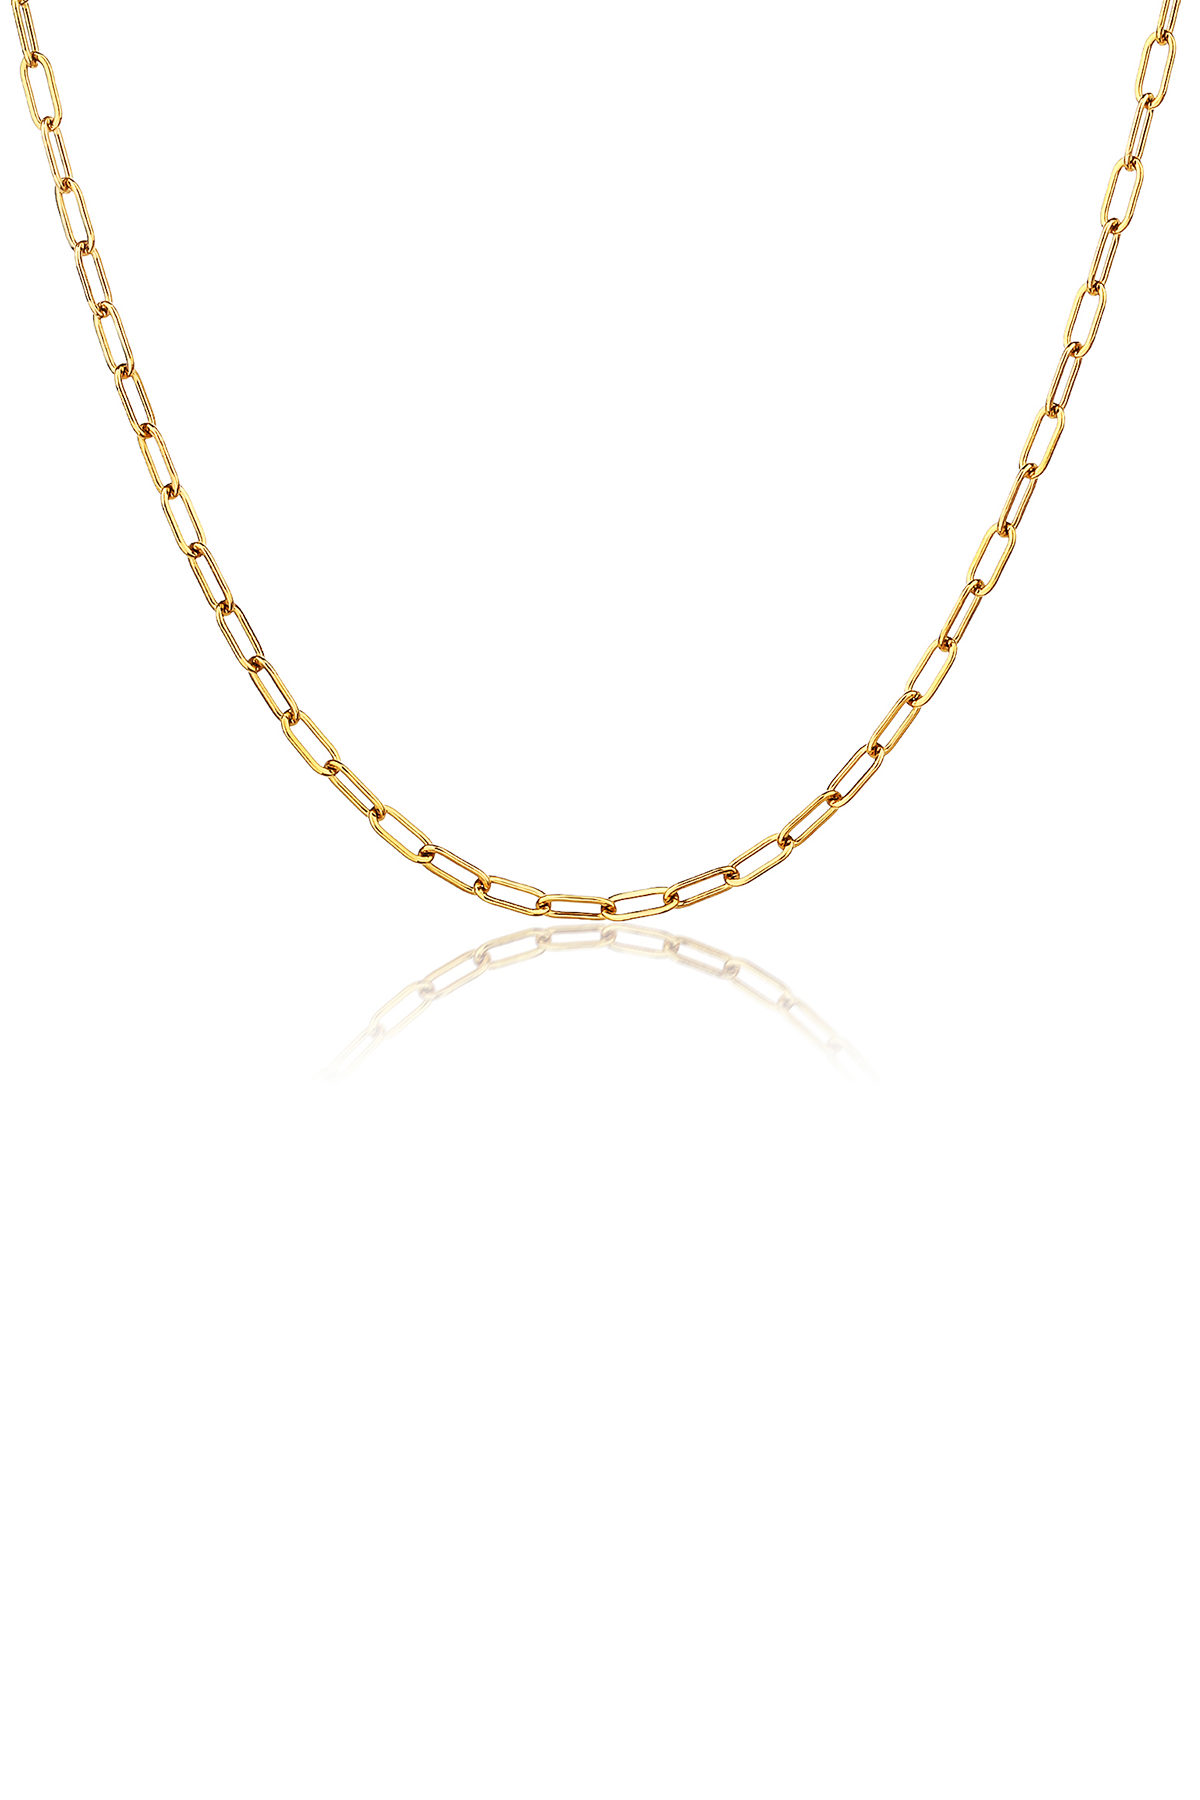 Paper clip necklace, gold